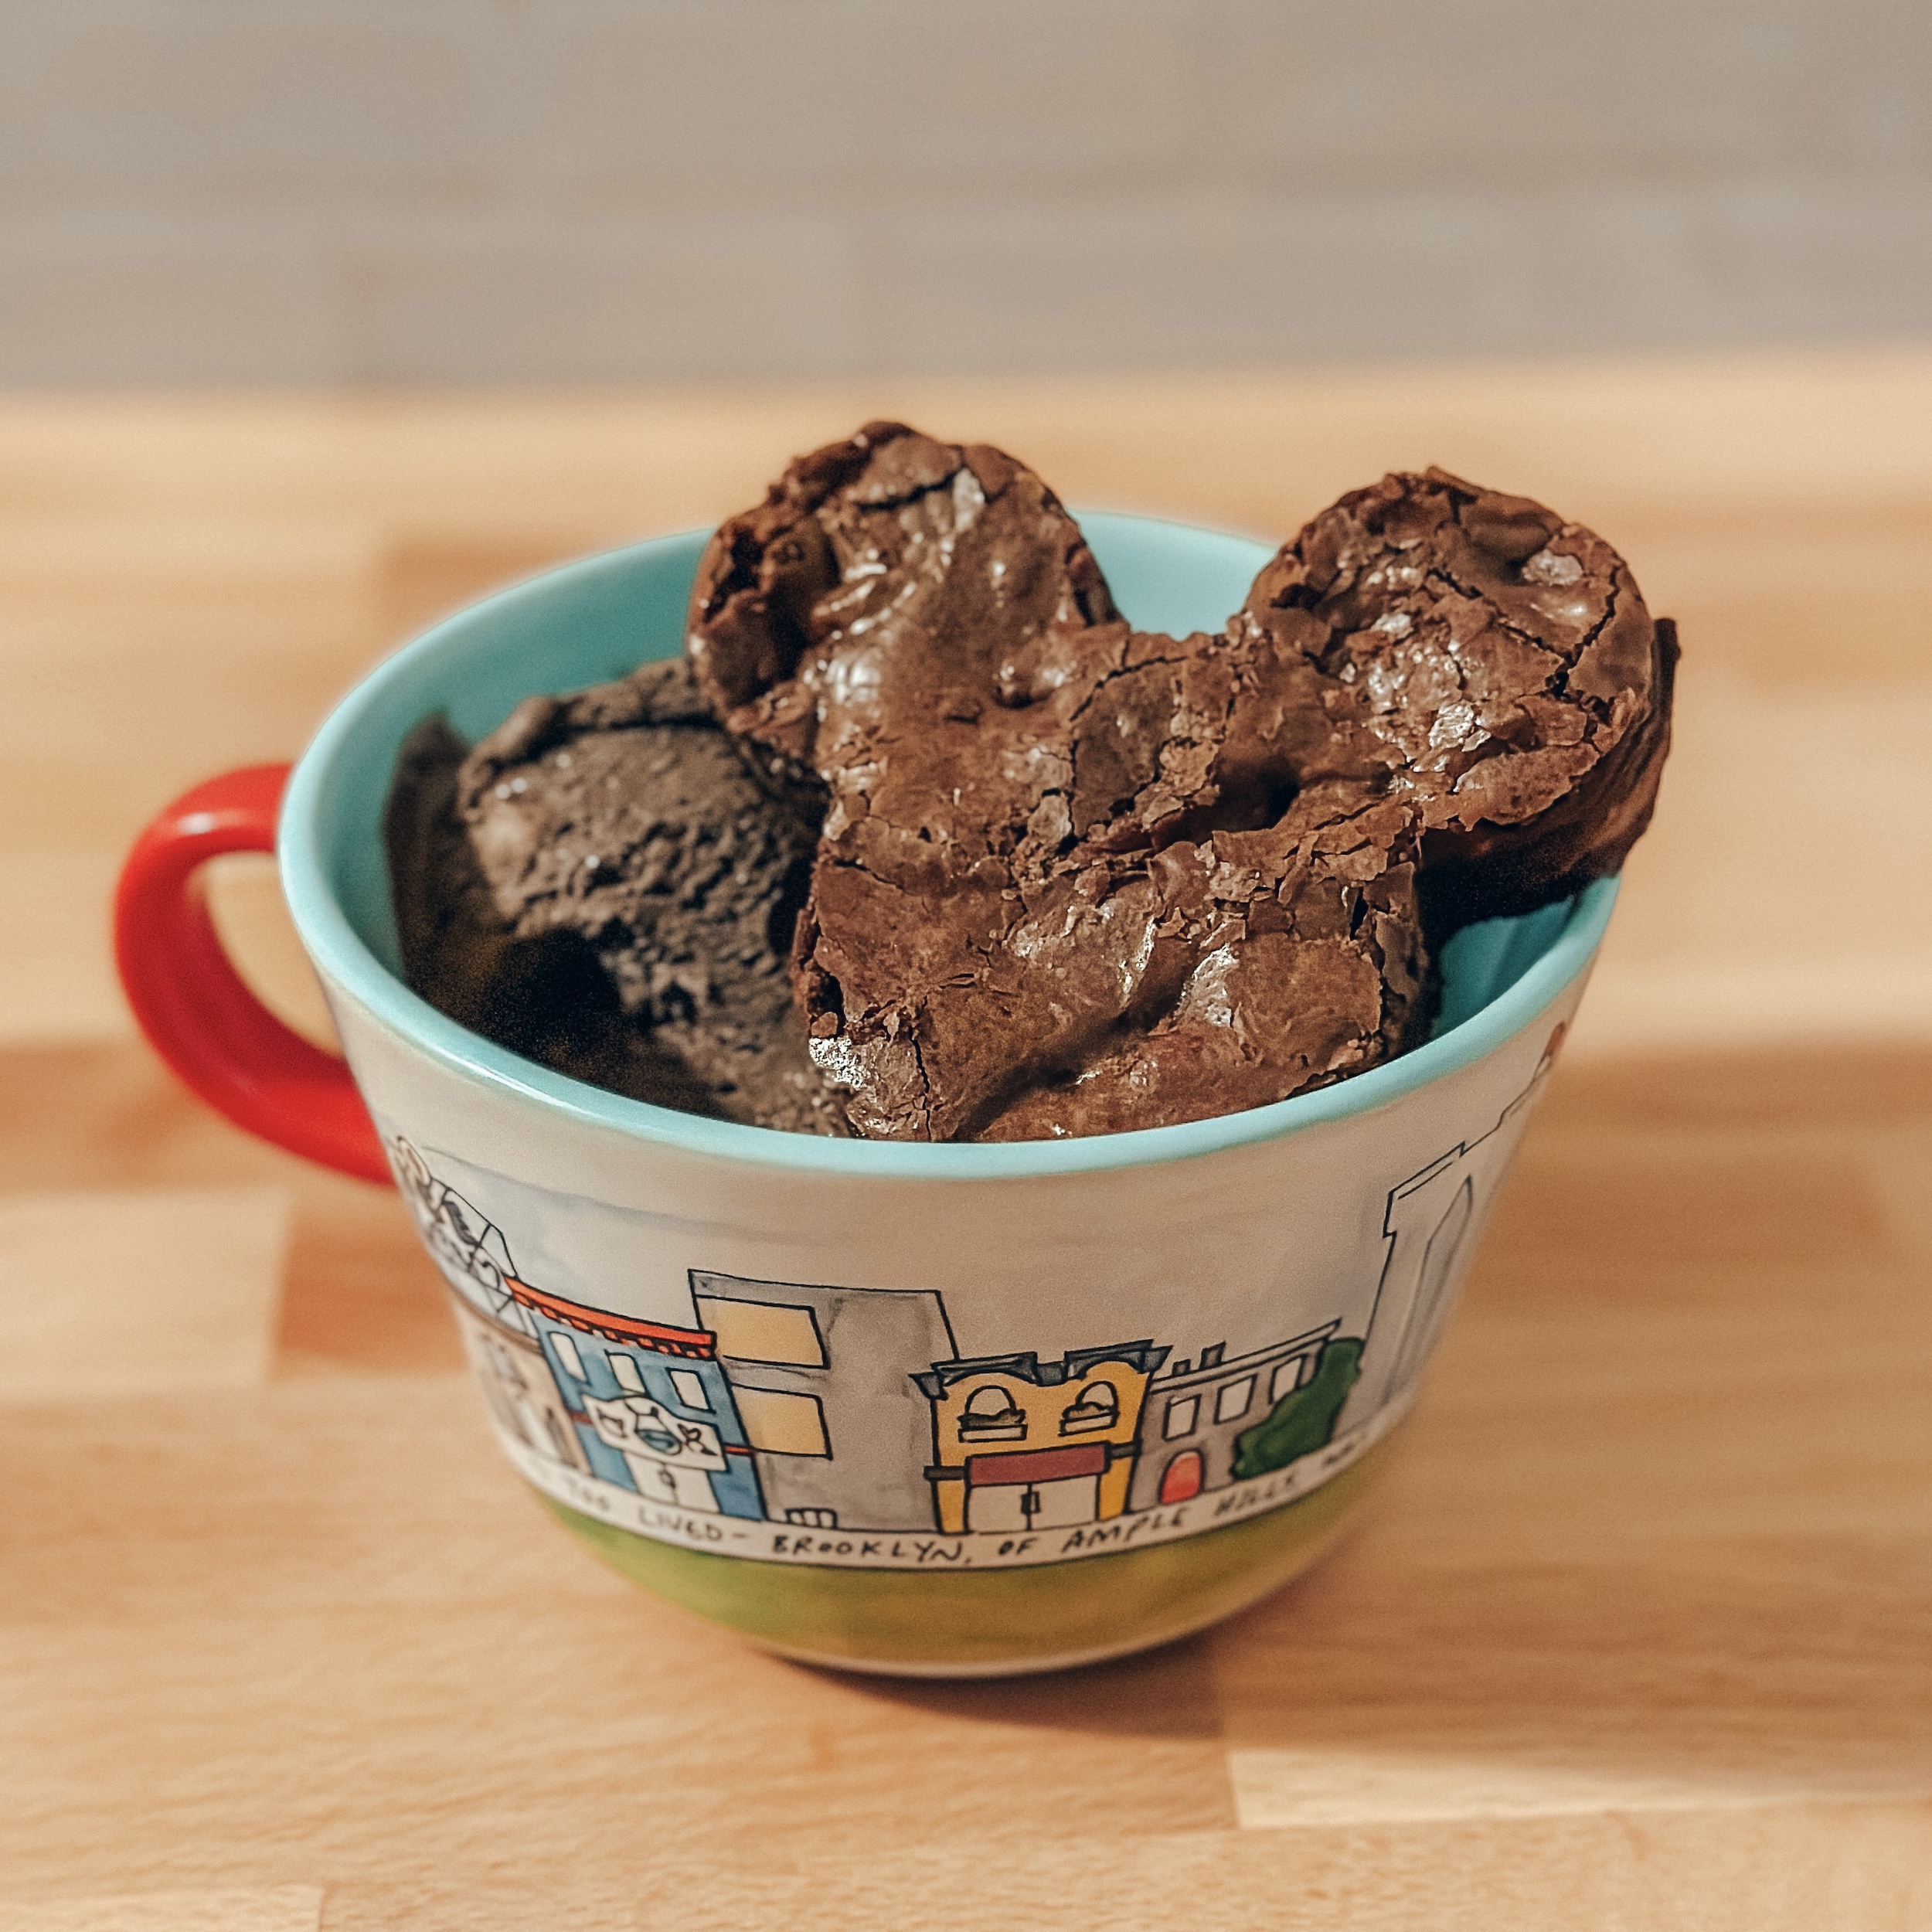 Mickey's Brownie Ice Cream Sundae (two scoops ice cream with a Mickey Mouse shaped brownie)